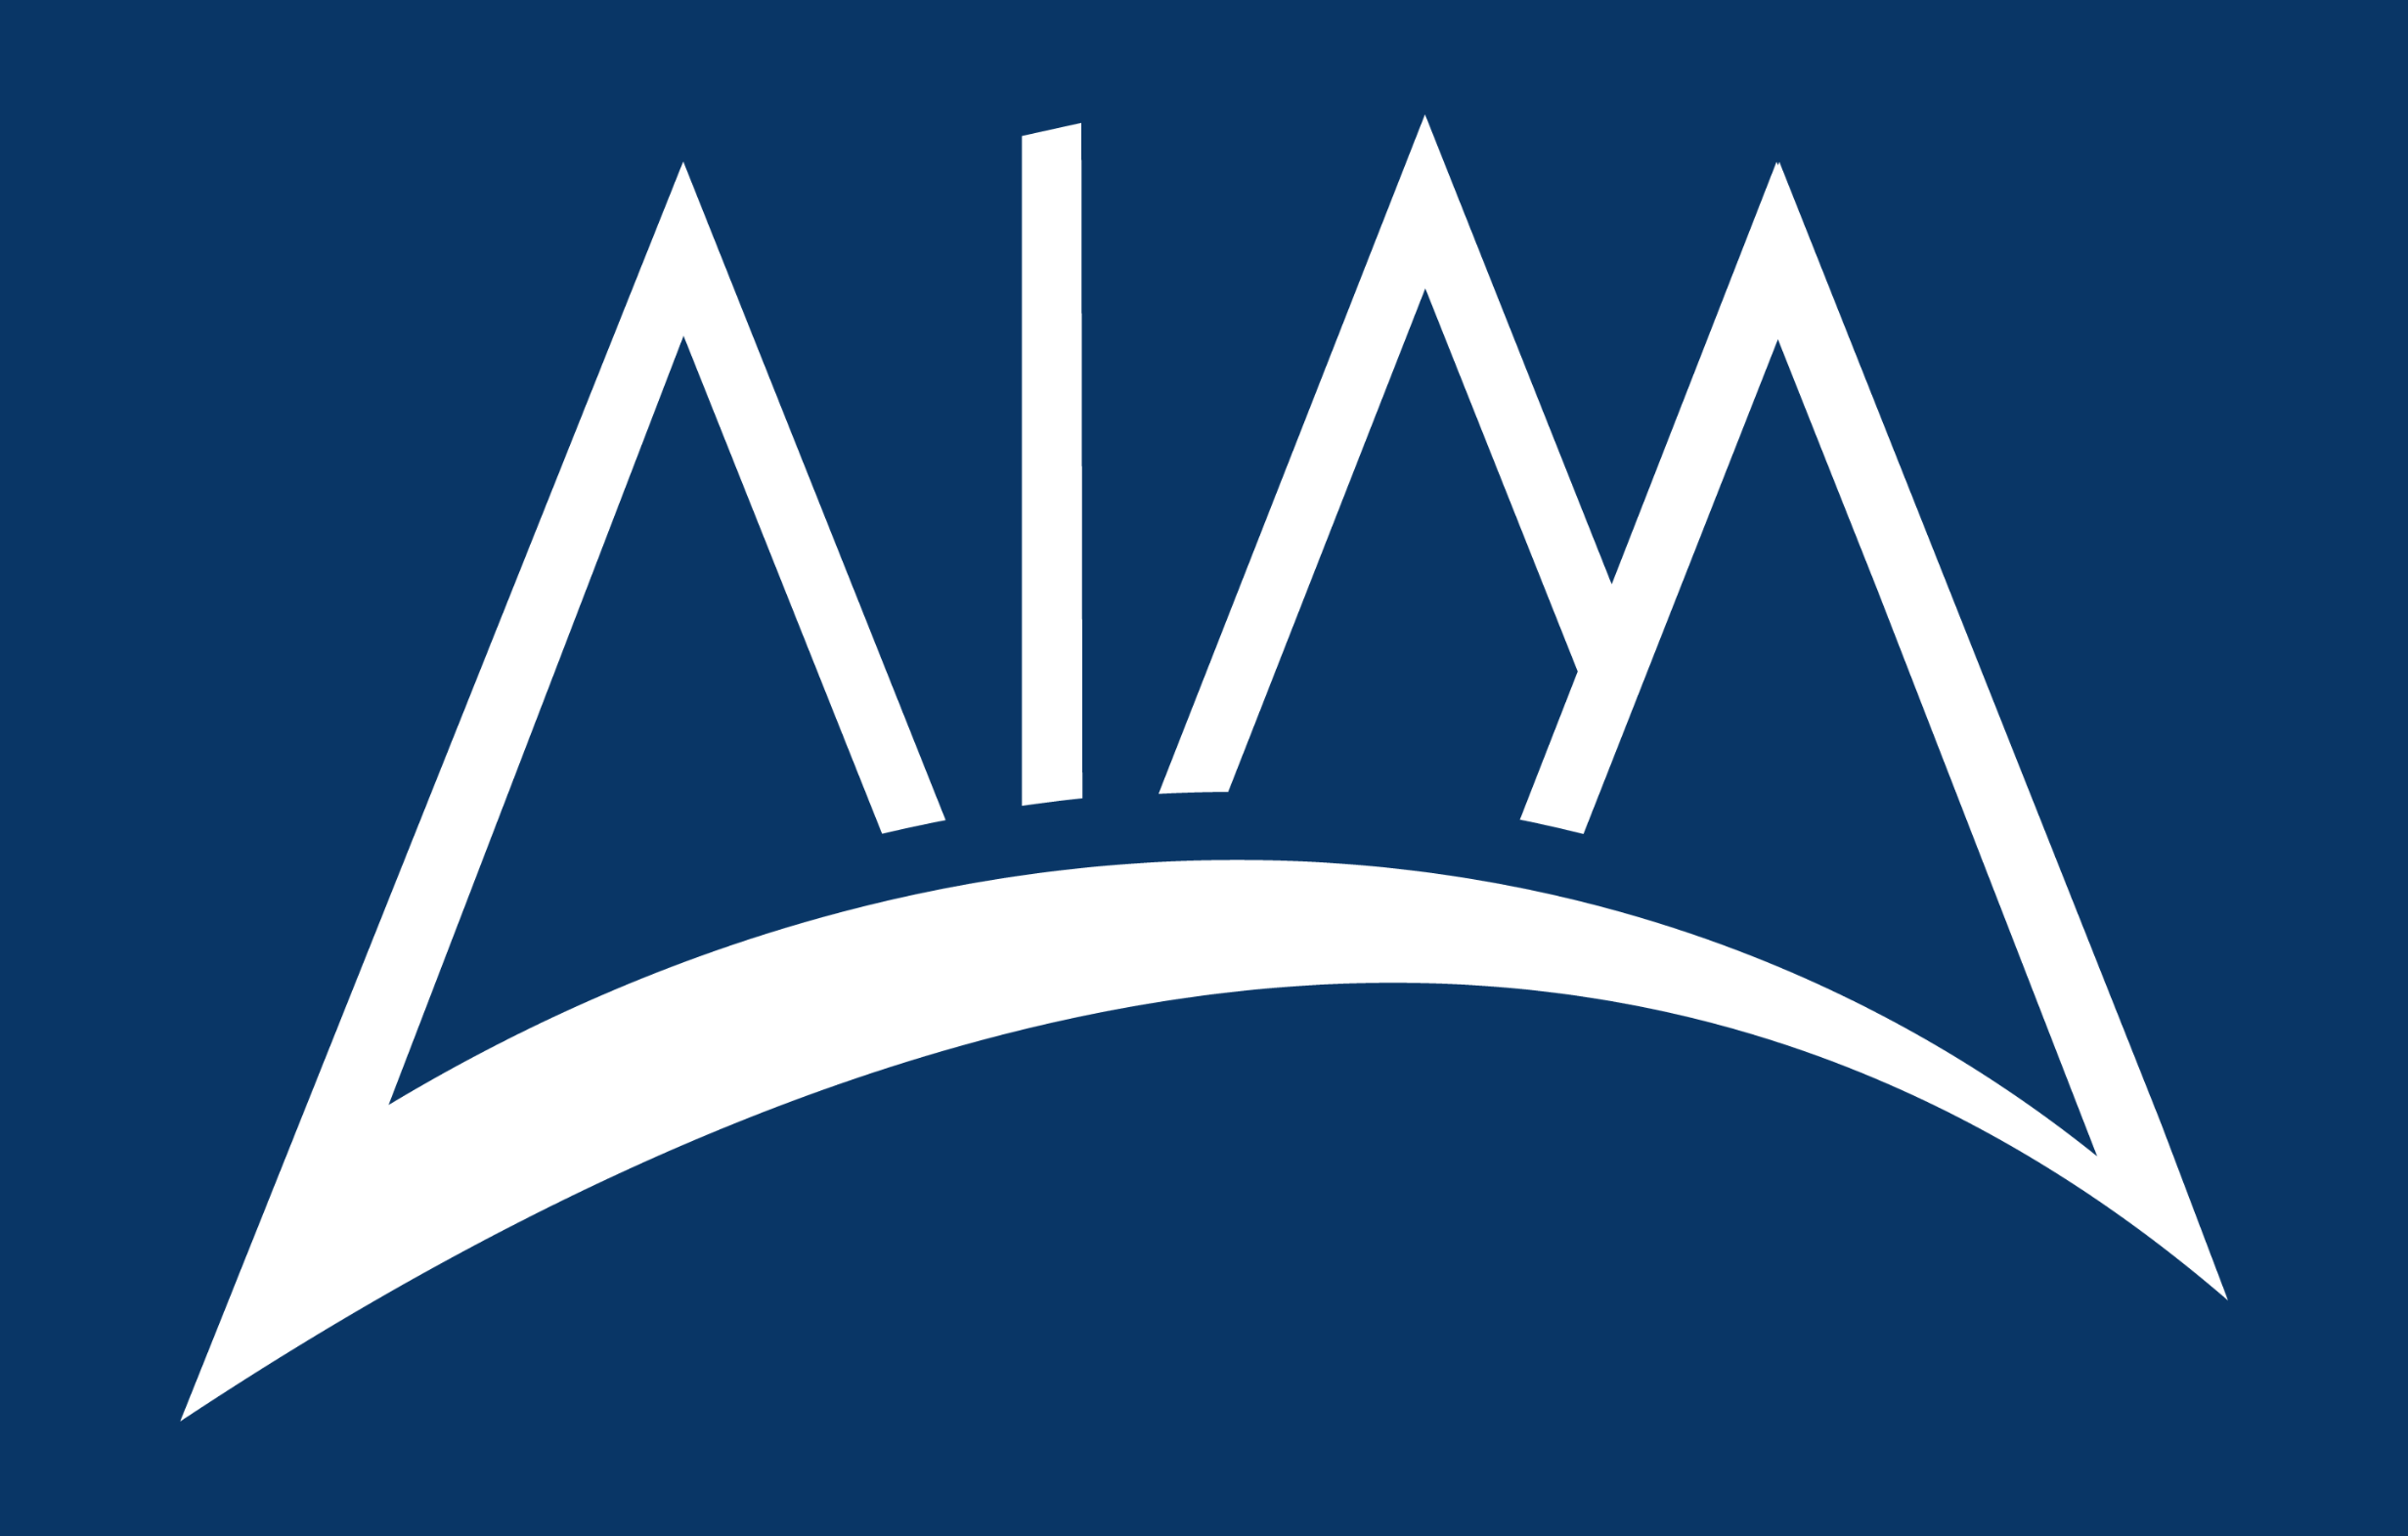 AIM Summit